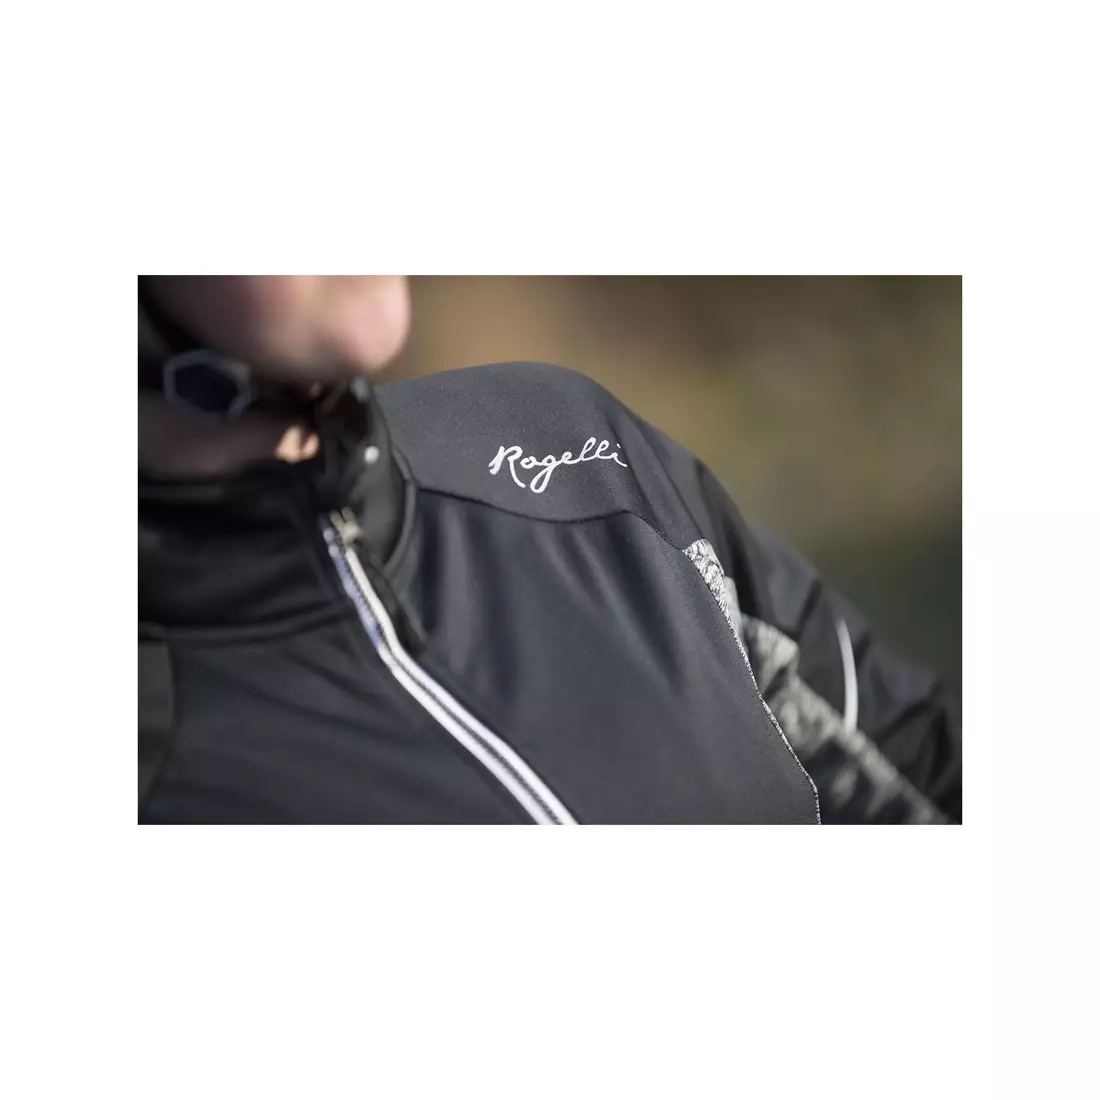 ROGELLI CARLYN 2.0 dámska zimná cyklistická bunda čierno-šedá